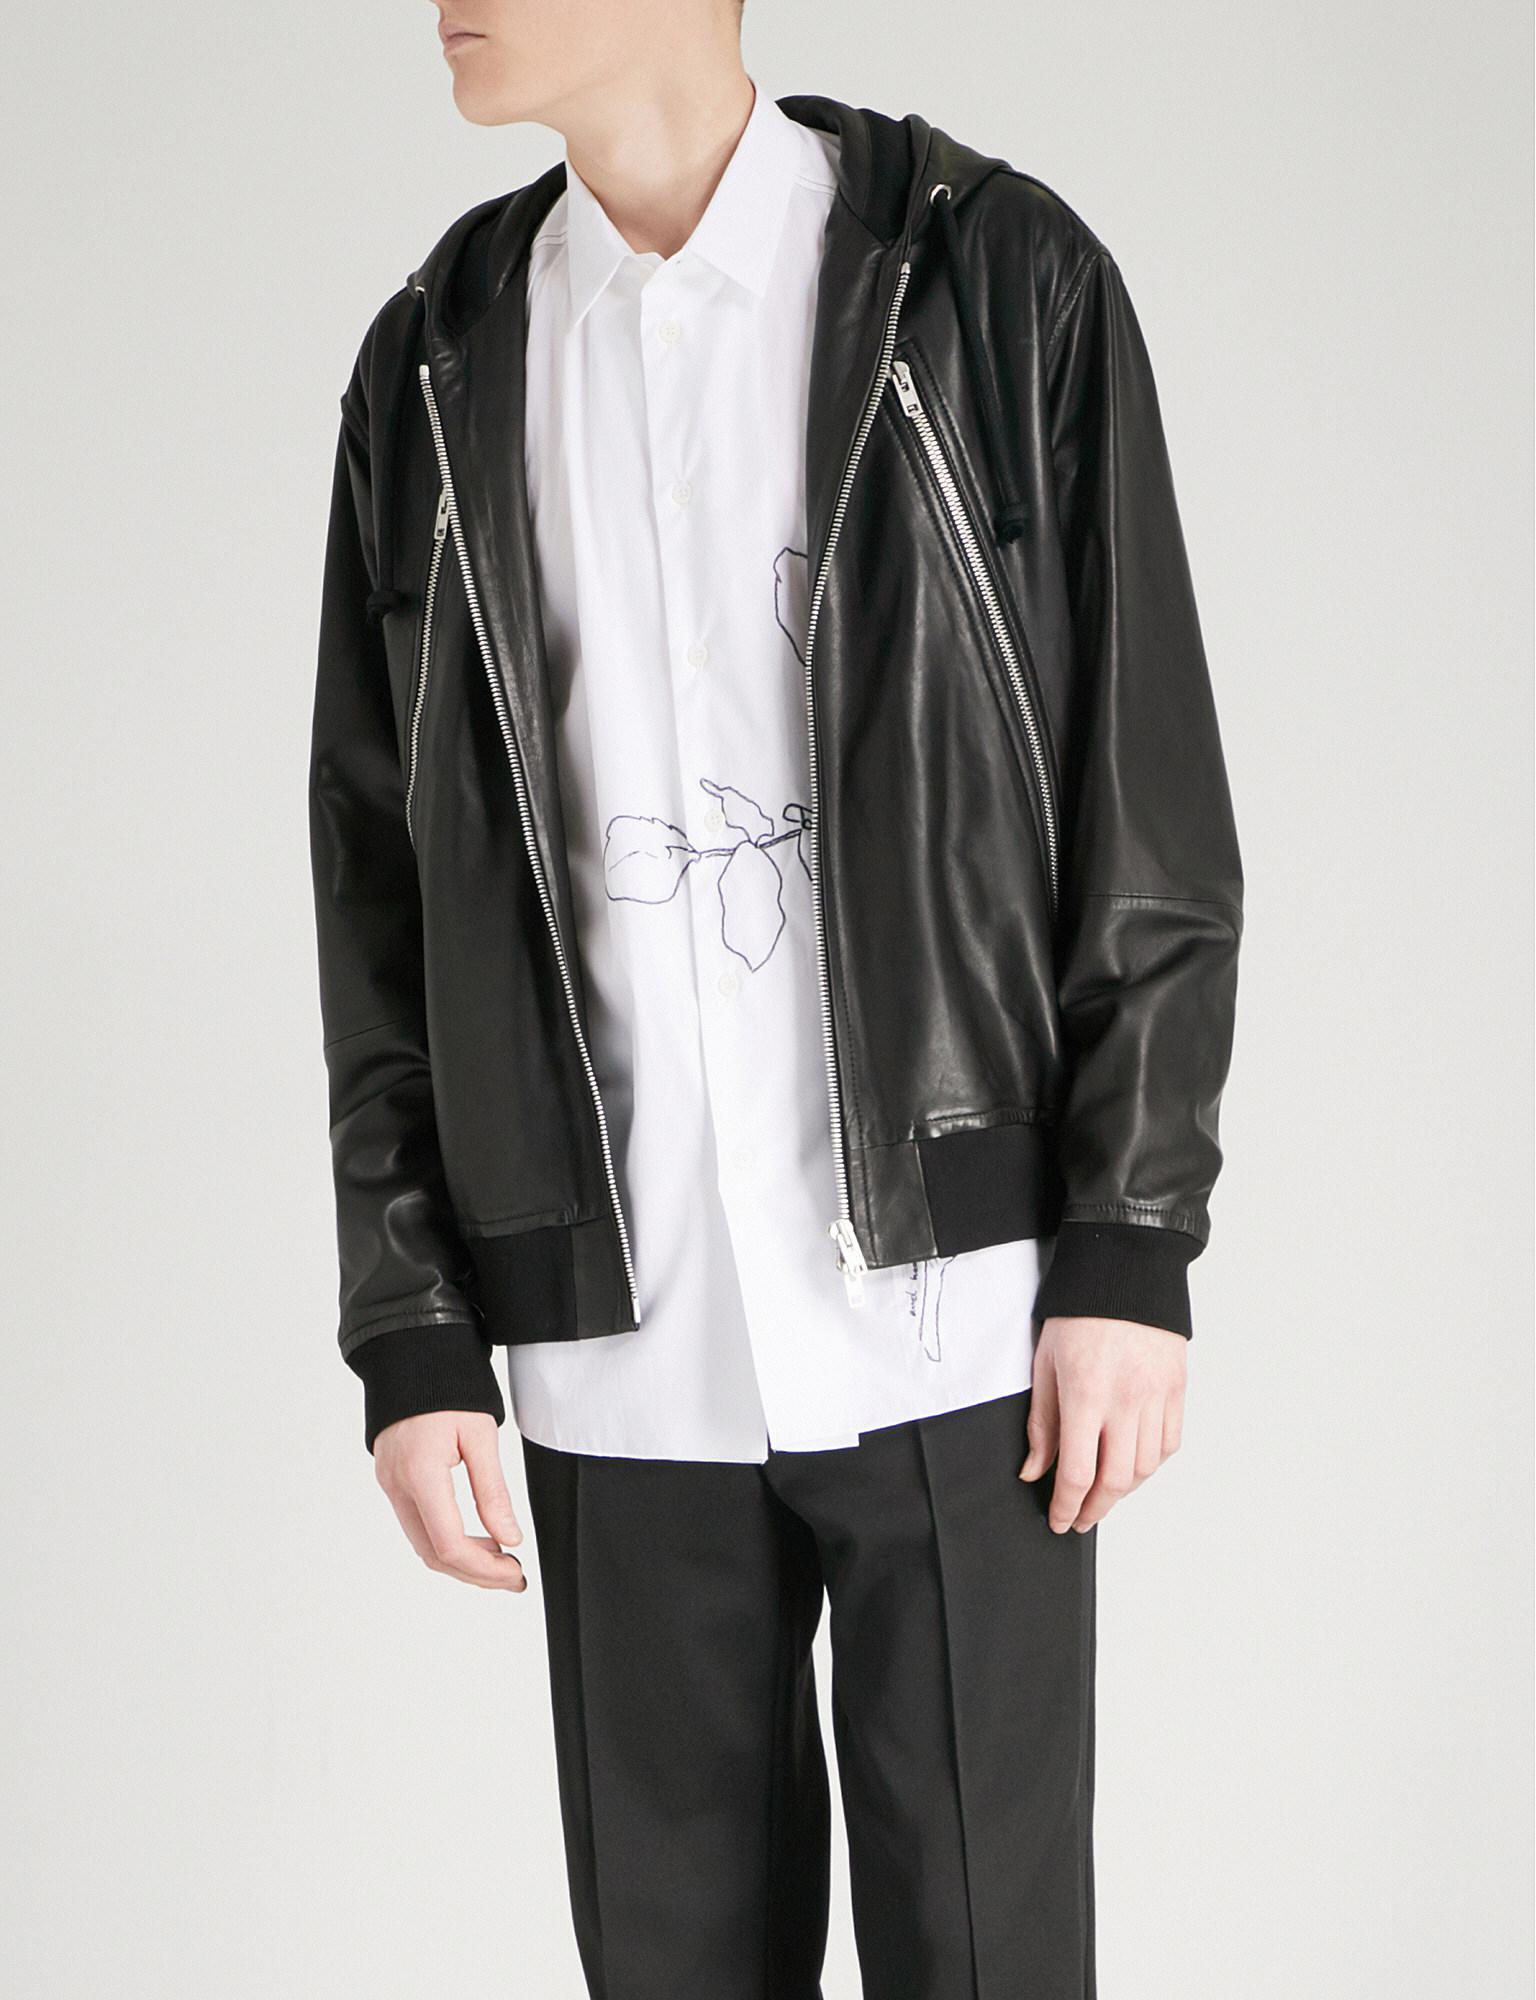 Maison Margiela Hooded Leather Jacket in Black for Men | Lyst